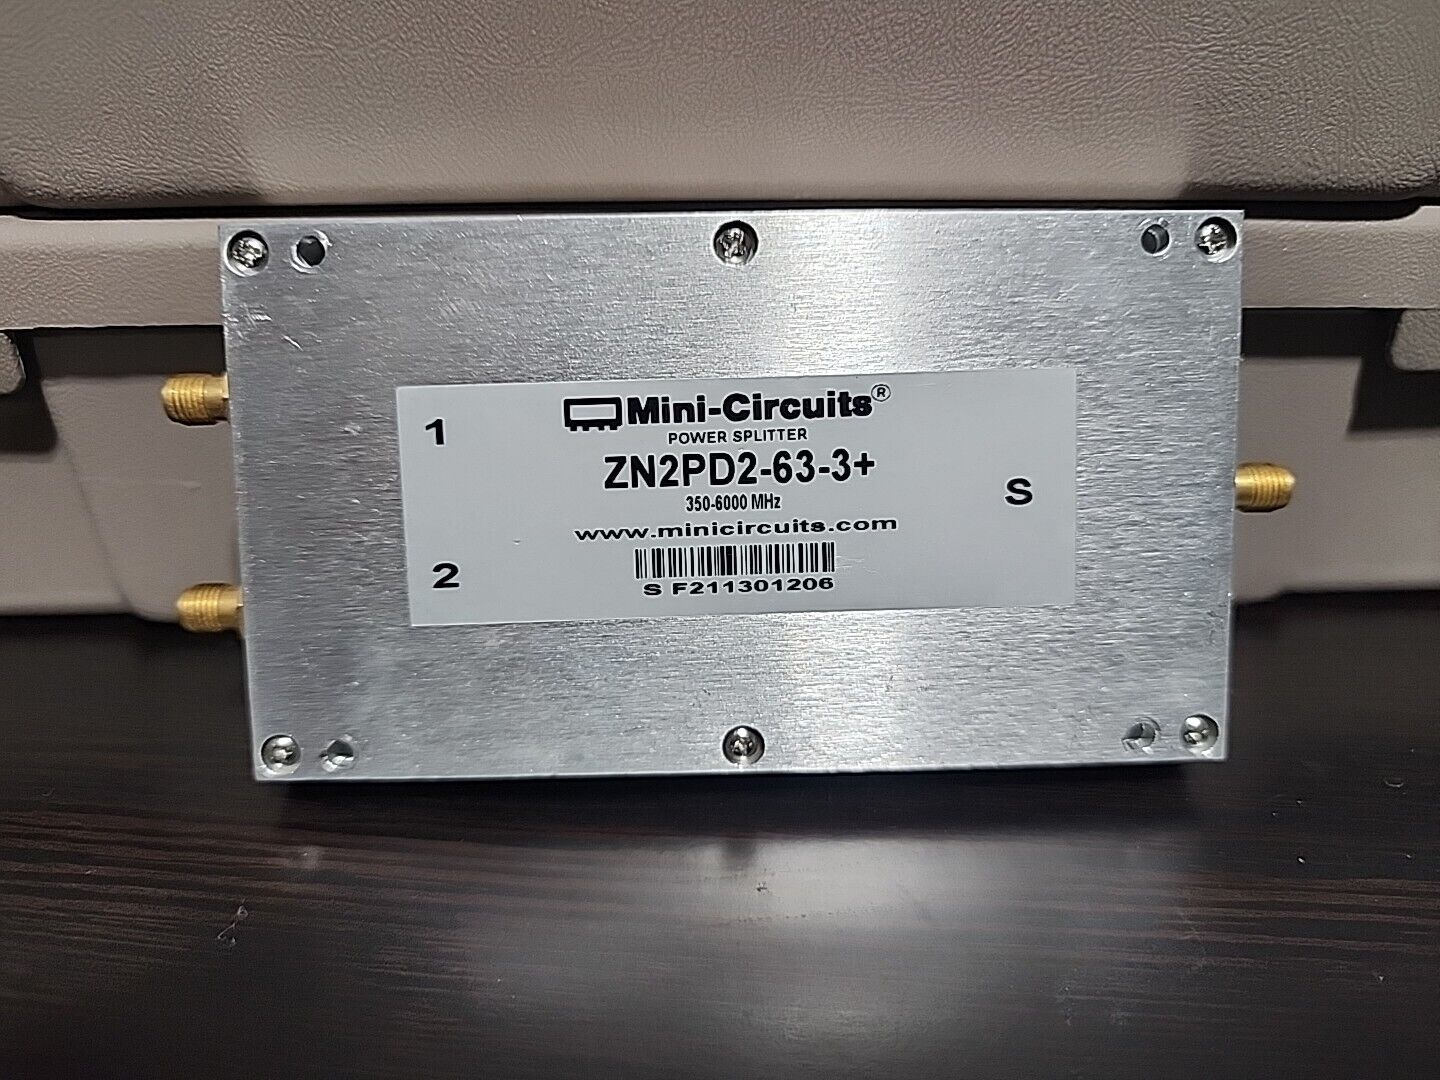 Mini Circuits ZN2PD2-63-3+ 350-6000MHz Power Splitter